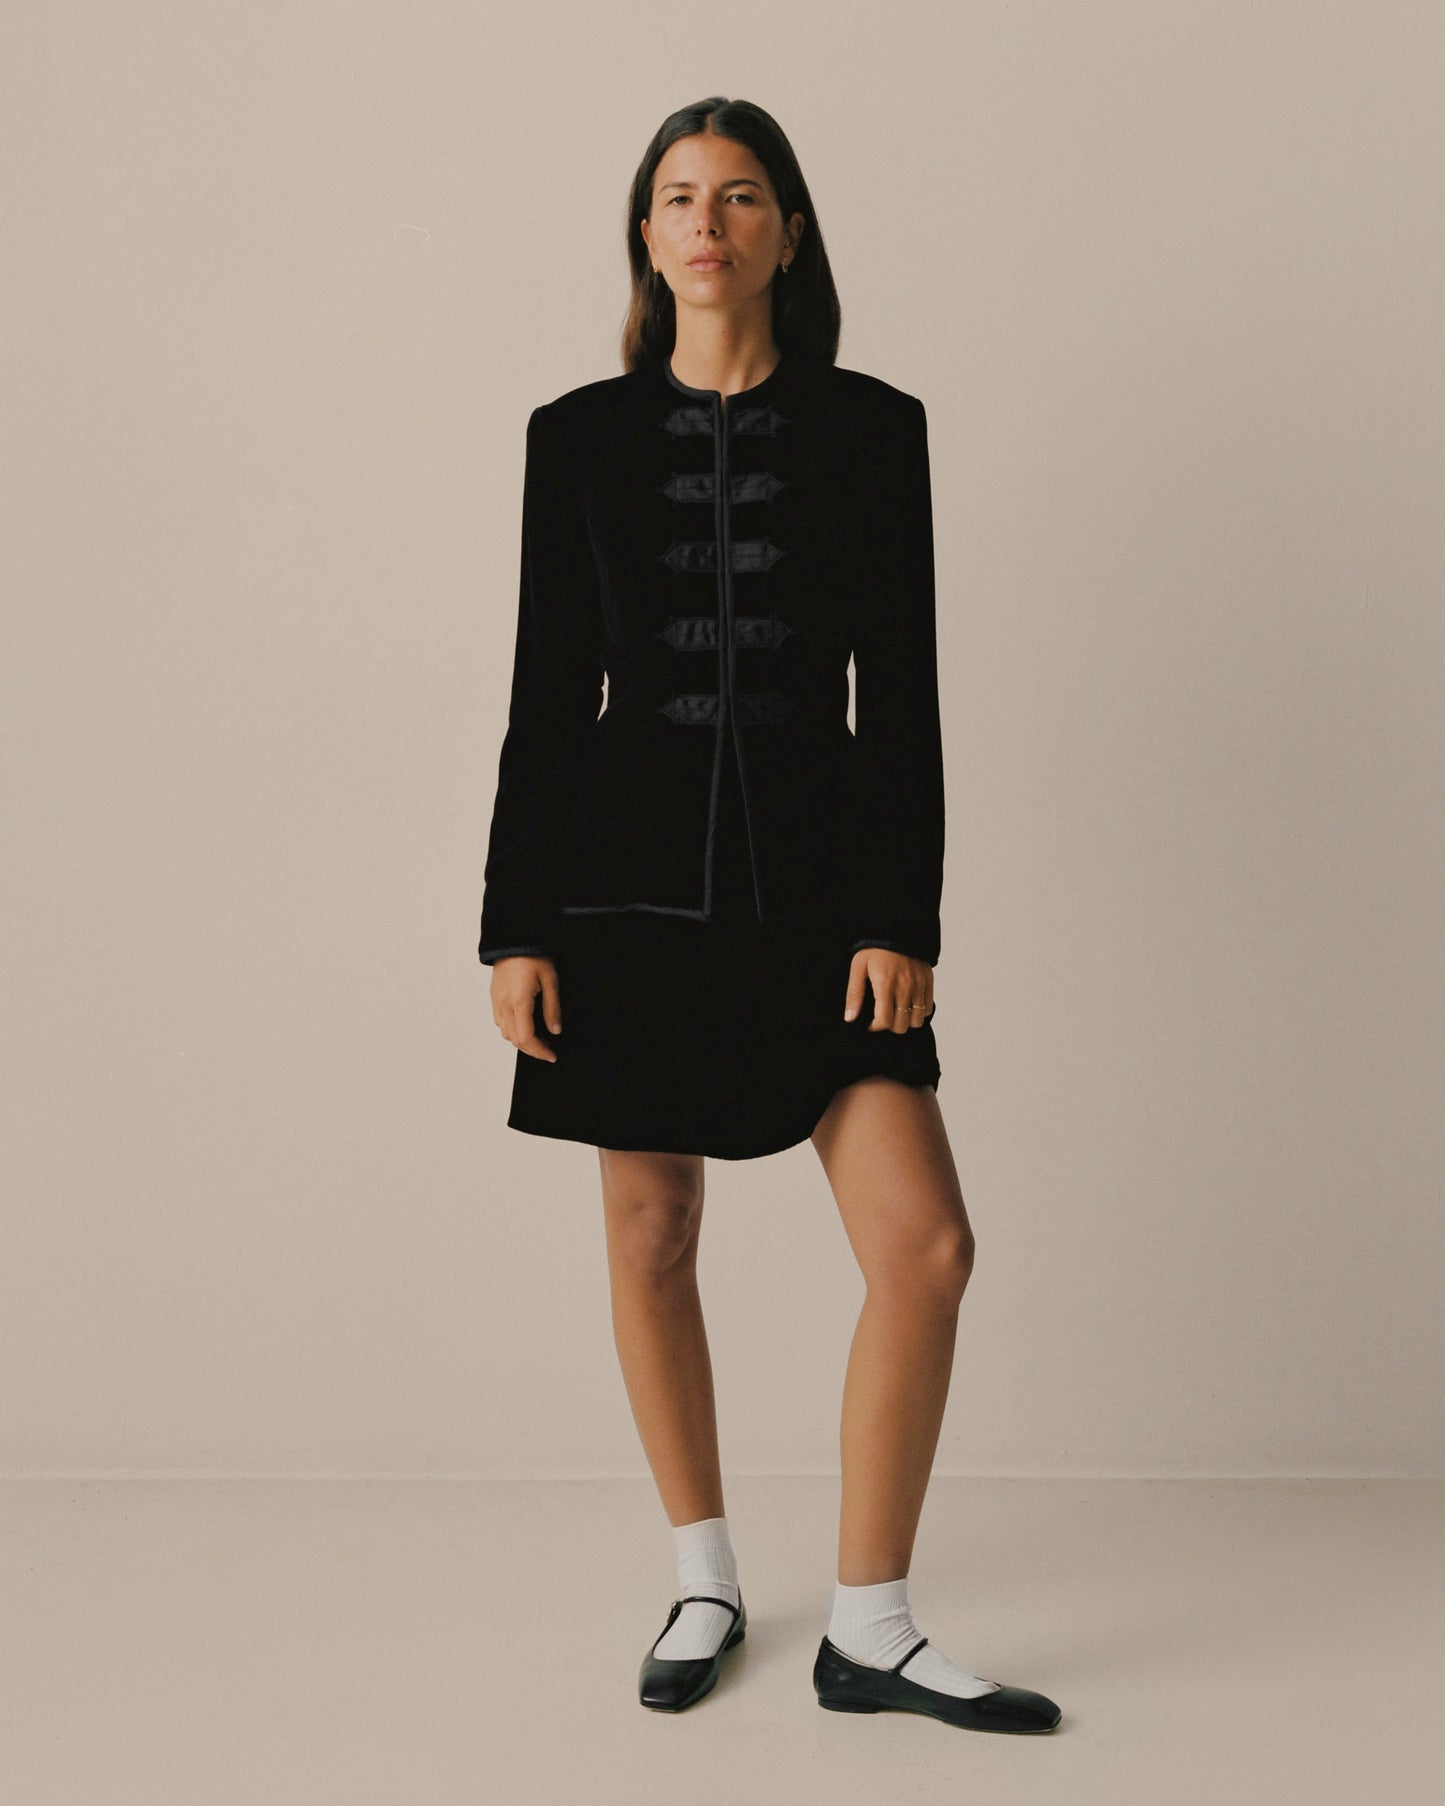 FALLON-suit-jacket-skirt-ralph-lauren-black-velvet-vintage-women-luxury-clothing-rare-fashion-curated-art-collection